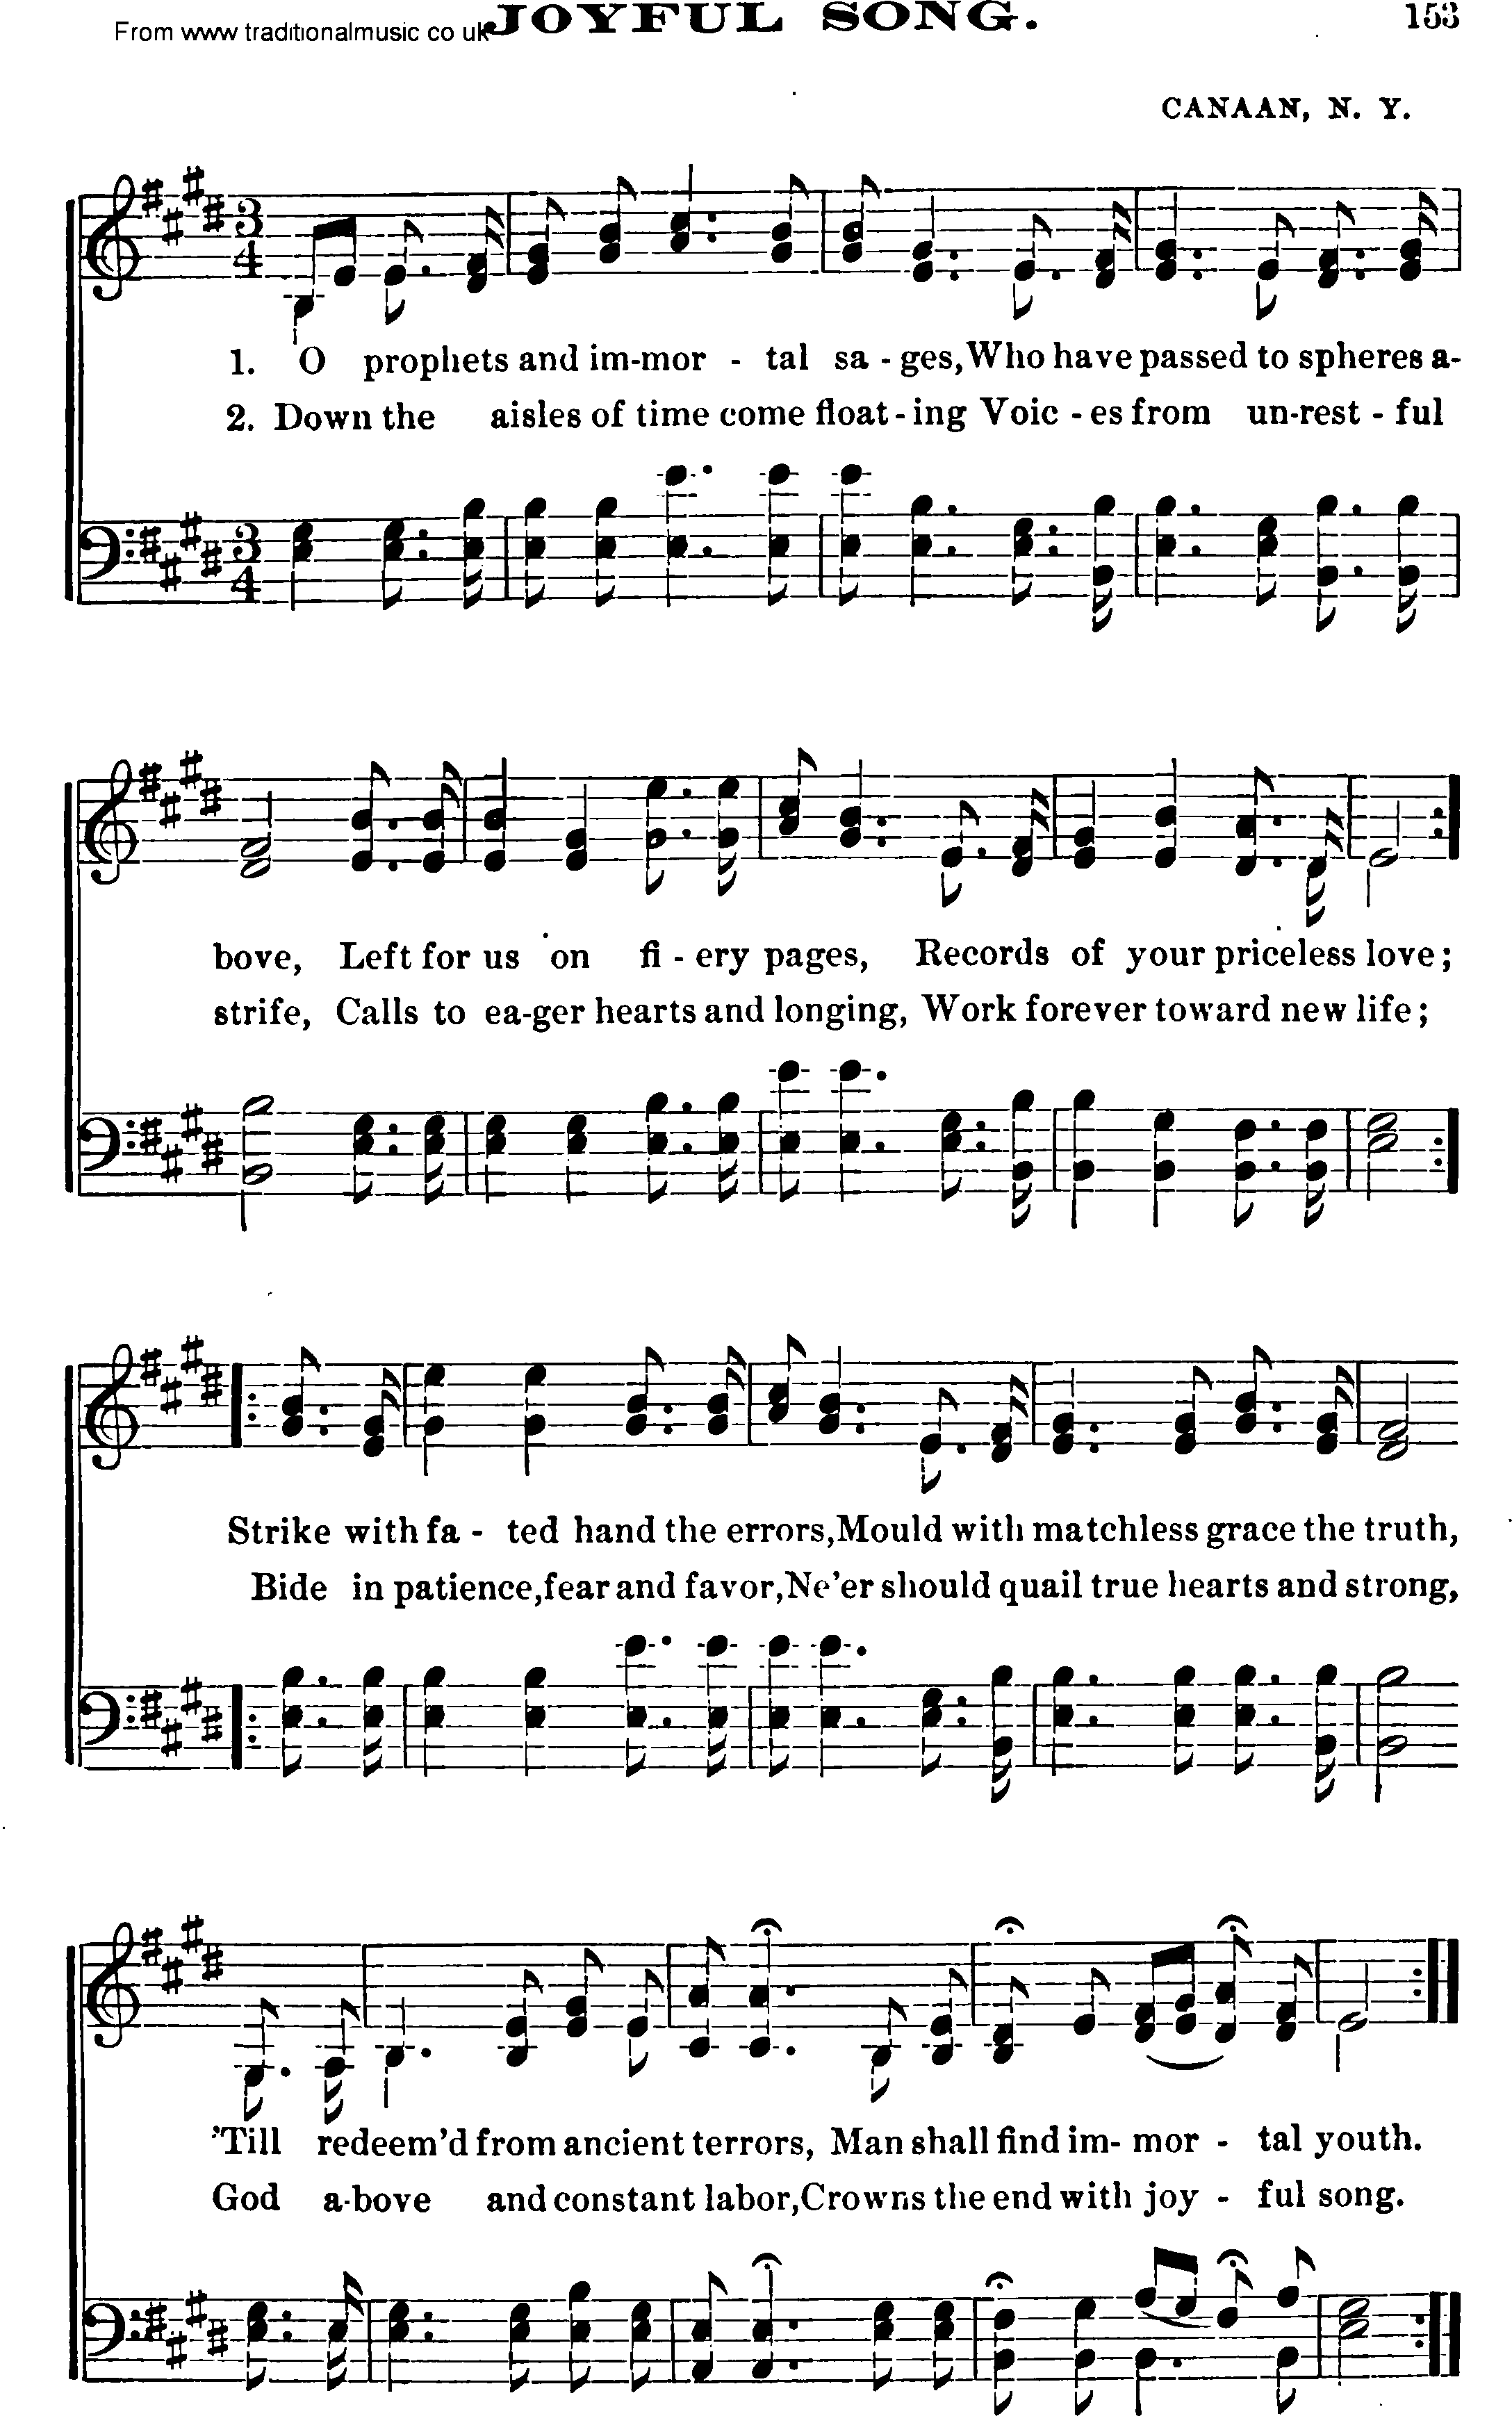 Shaker Music collection, Hymn: Joyful Song, sheetmusic and PDF